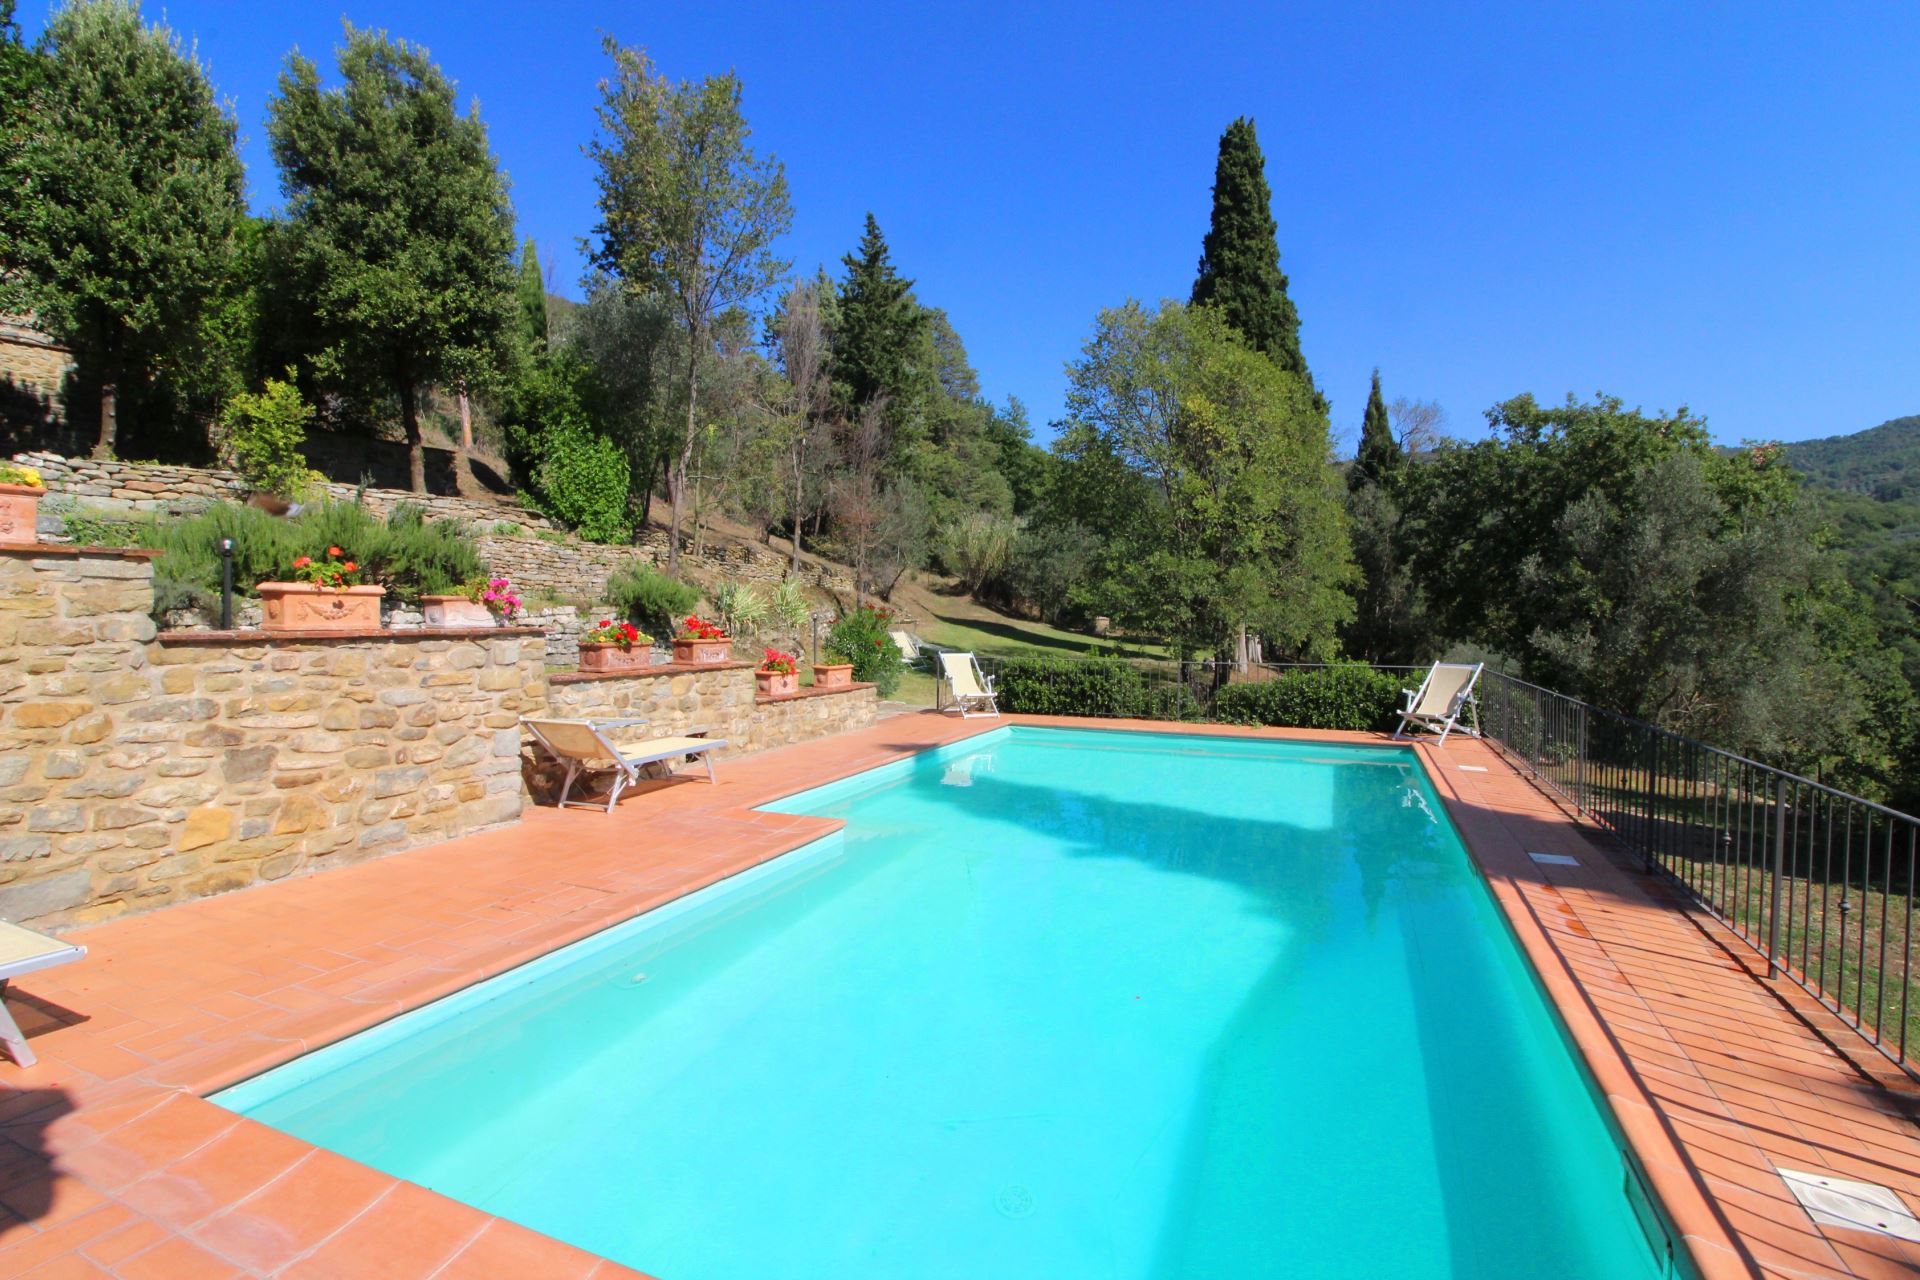 434_298e38e_Kindvriendelijk vakantiehuis met privé zwembad, Borgo Caprile, Toscane, Cortona, Arezzo, (45).